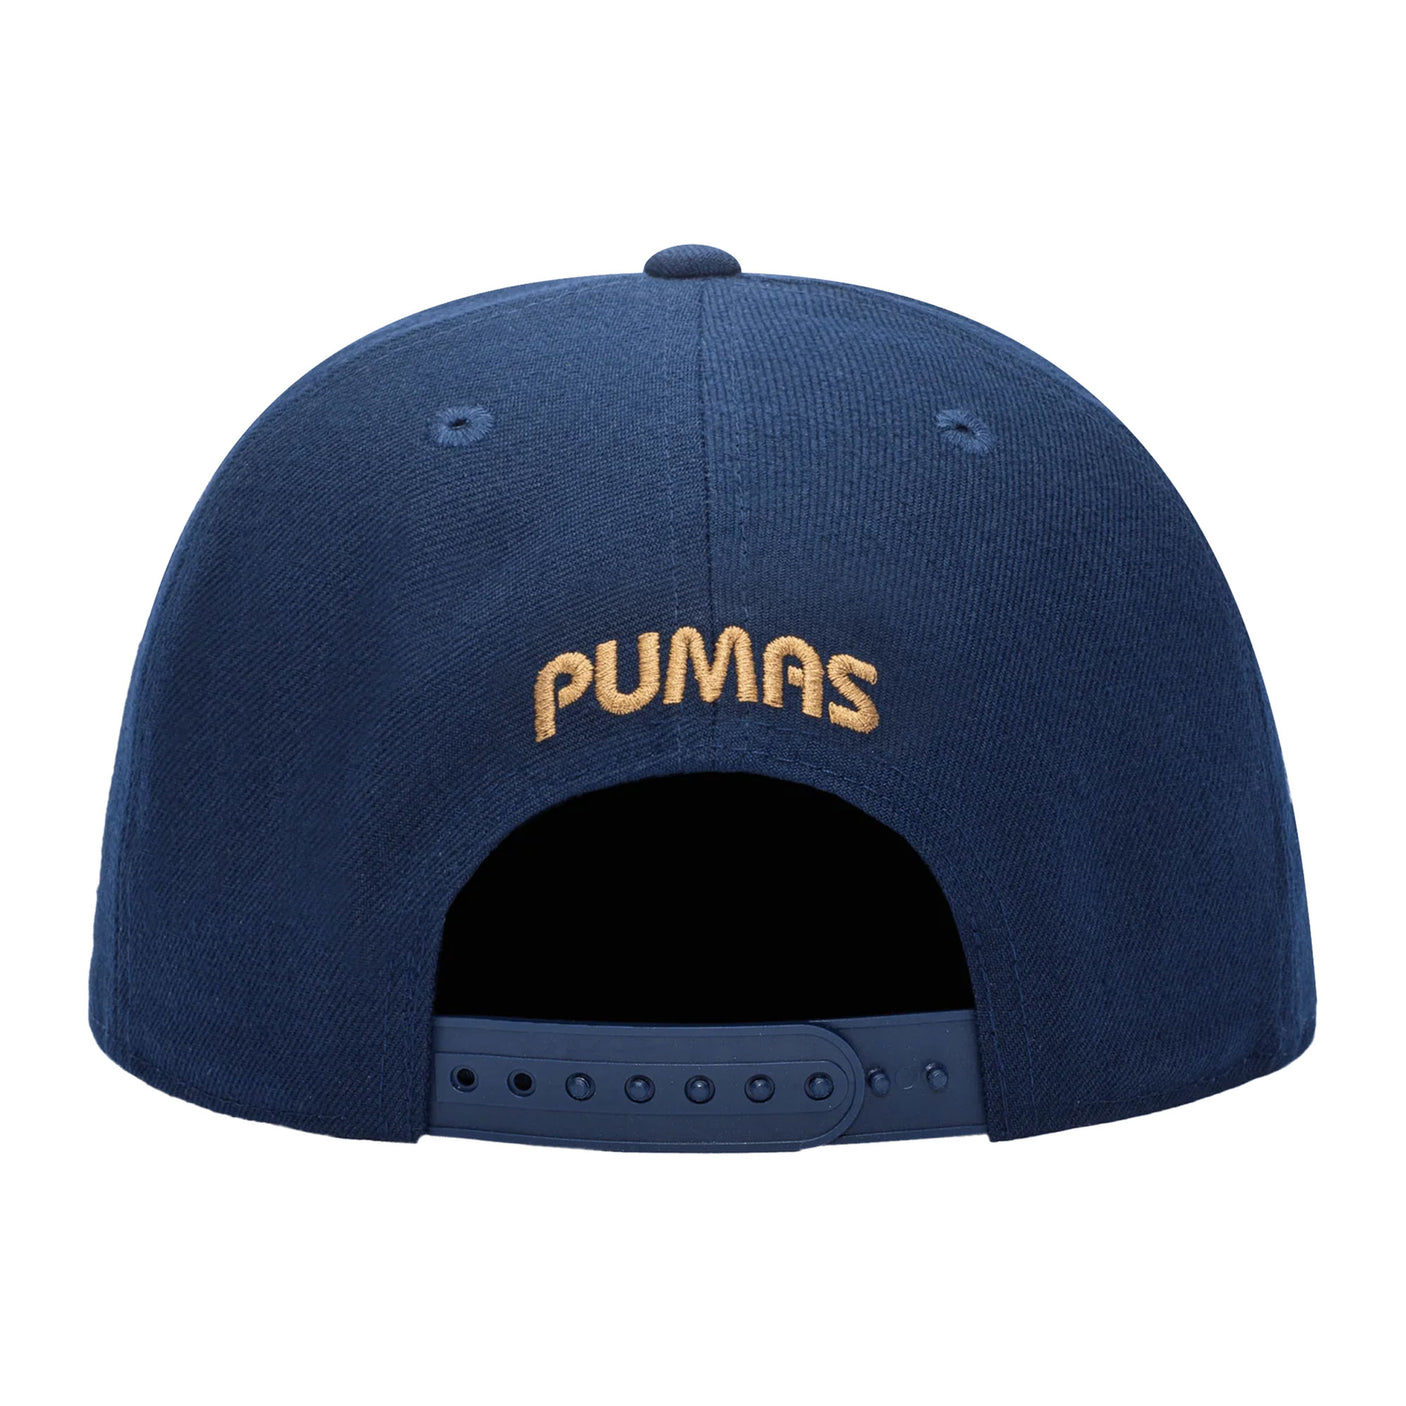 Fan Ink Pumas Dawn Snap Back Hat Navy/Gold Back